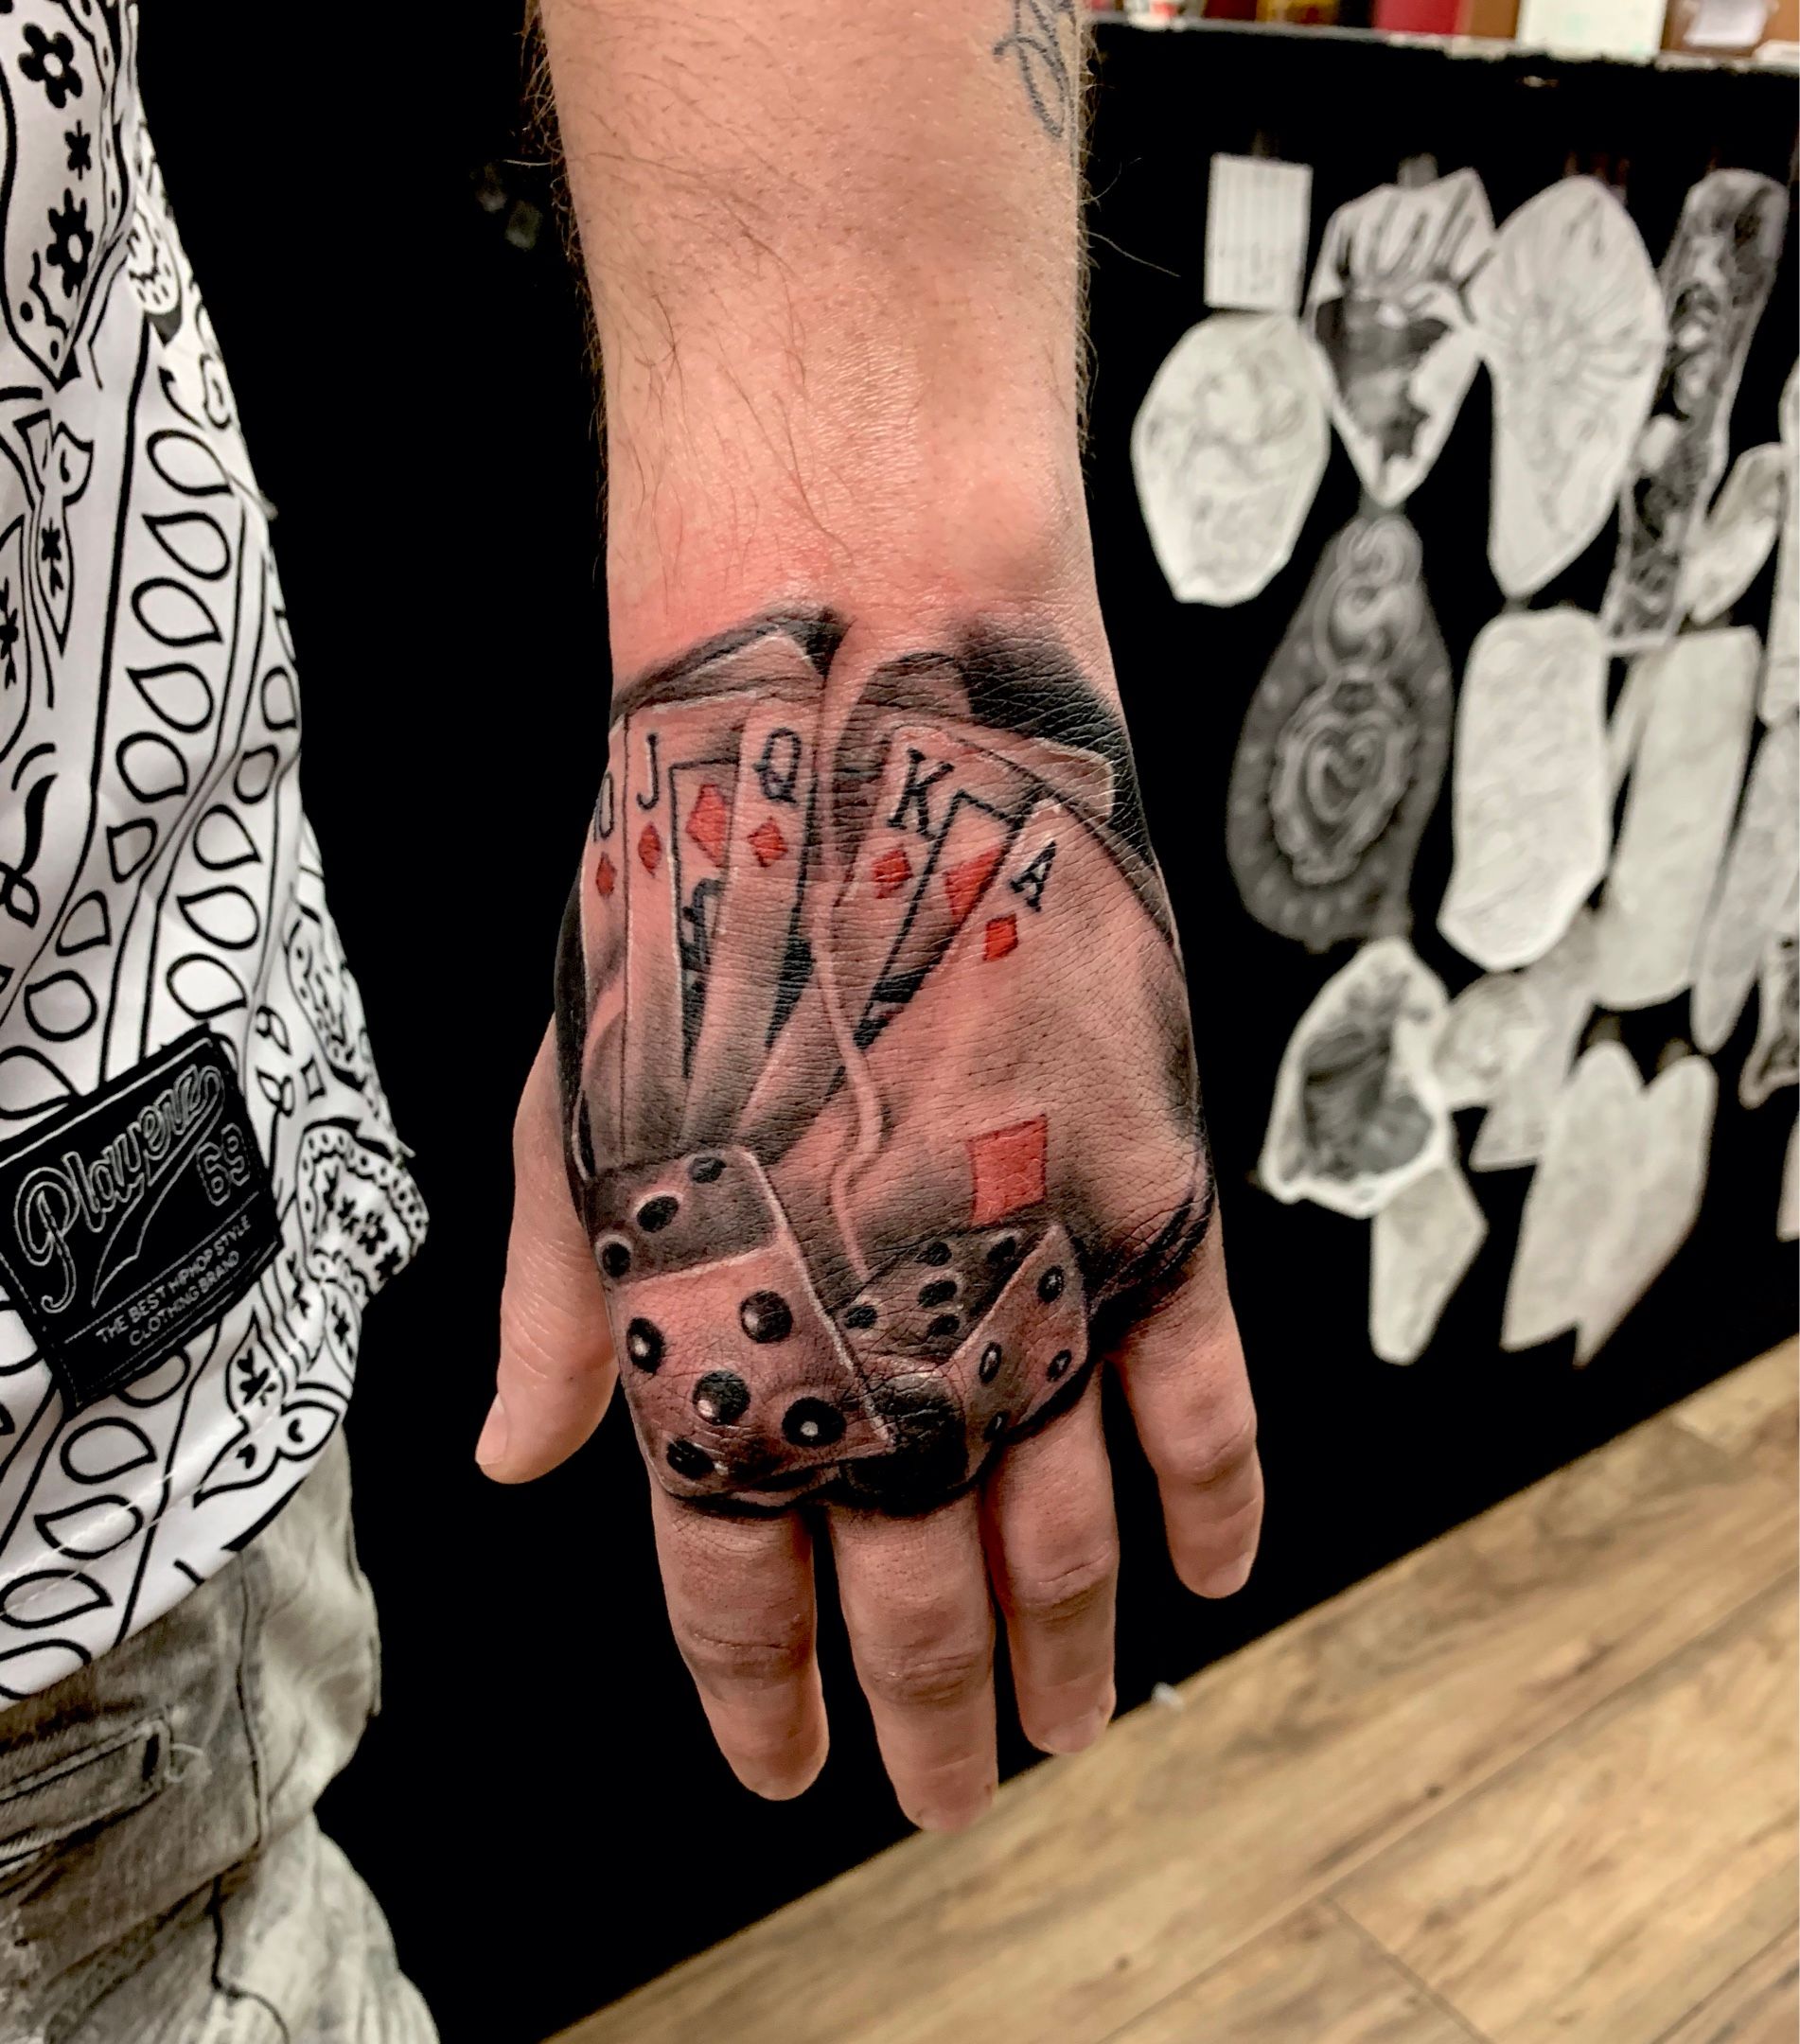 My tribute to my grandfathers dice hand tattoo hand tattoo dice tattoos   Vegas tattoo Hand tattoos Tattoos